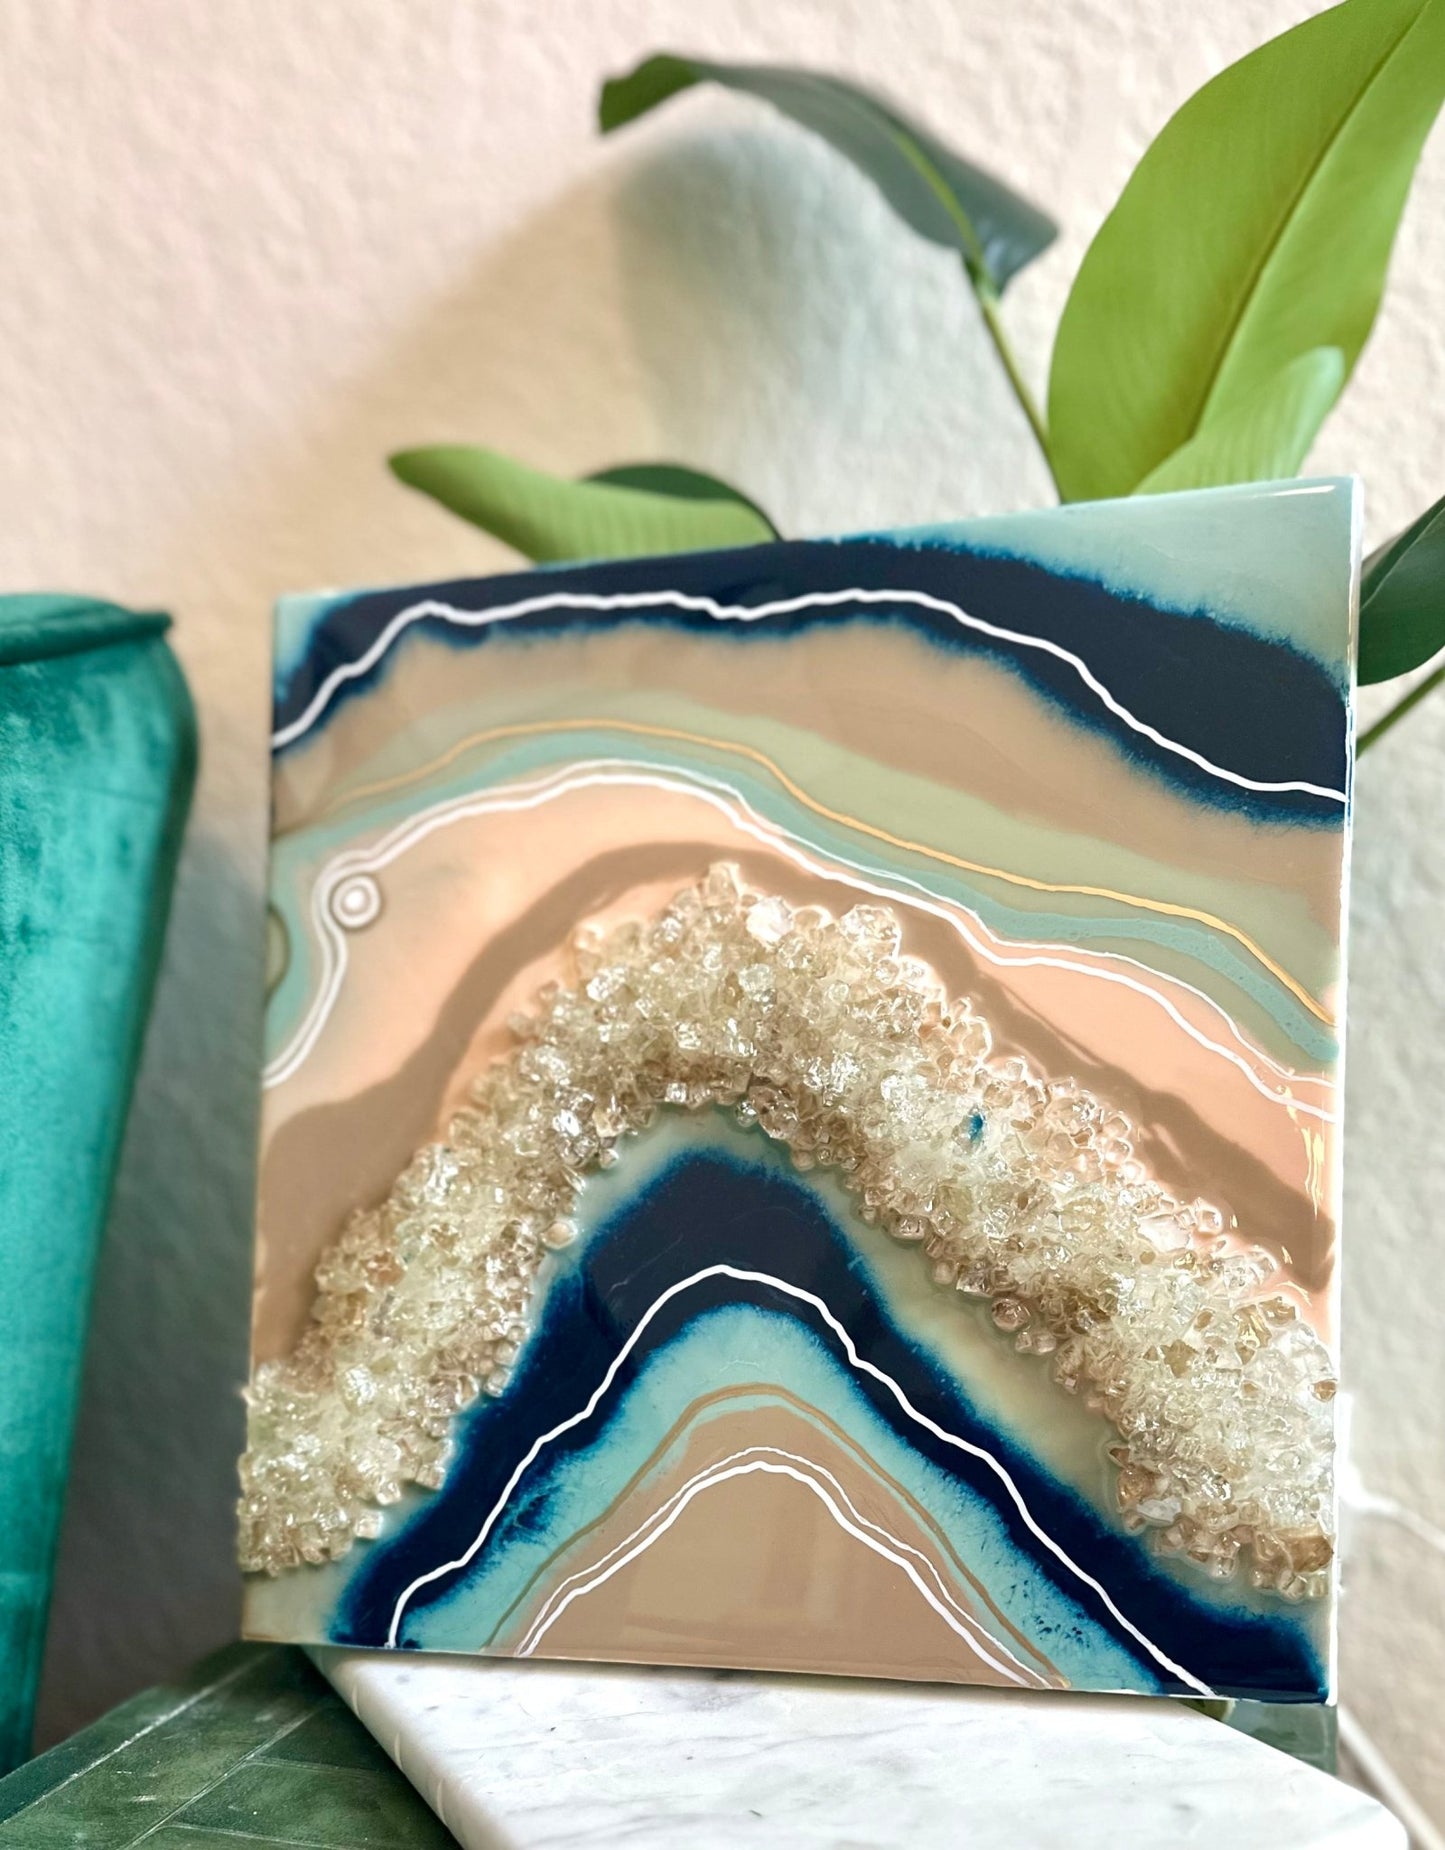 Blue + Pink Geode - Bragg About It Artistry